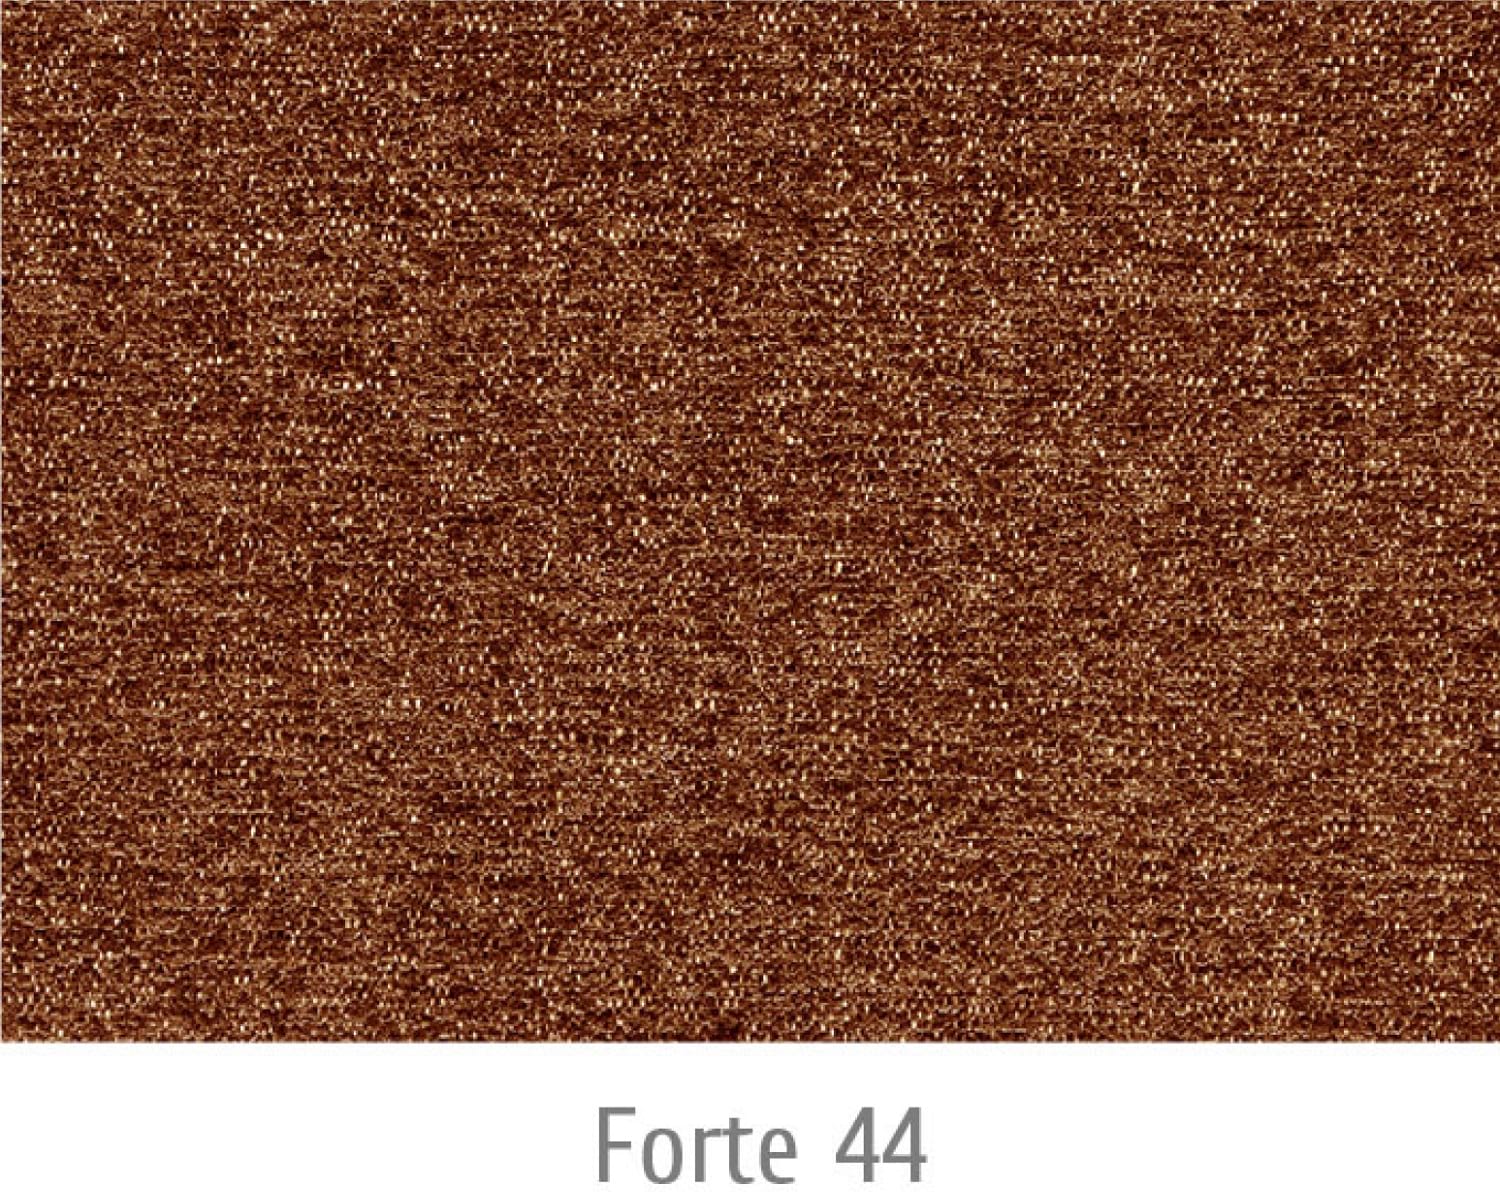 Forte44